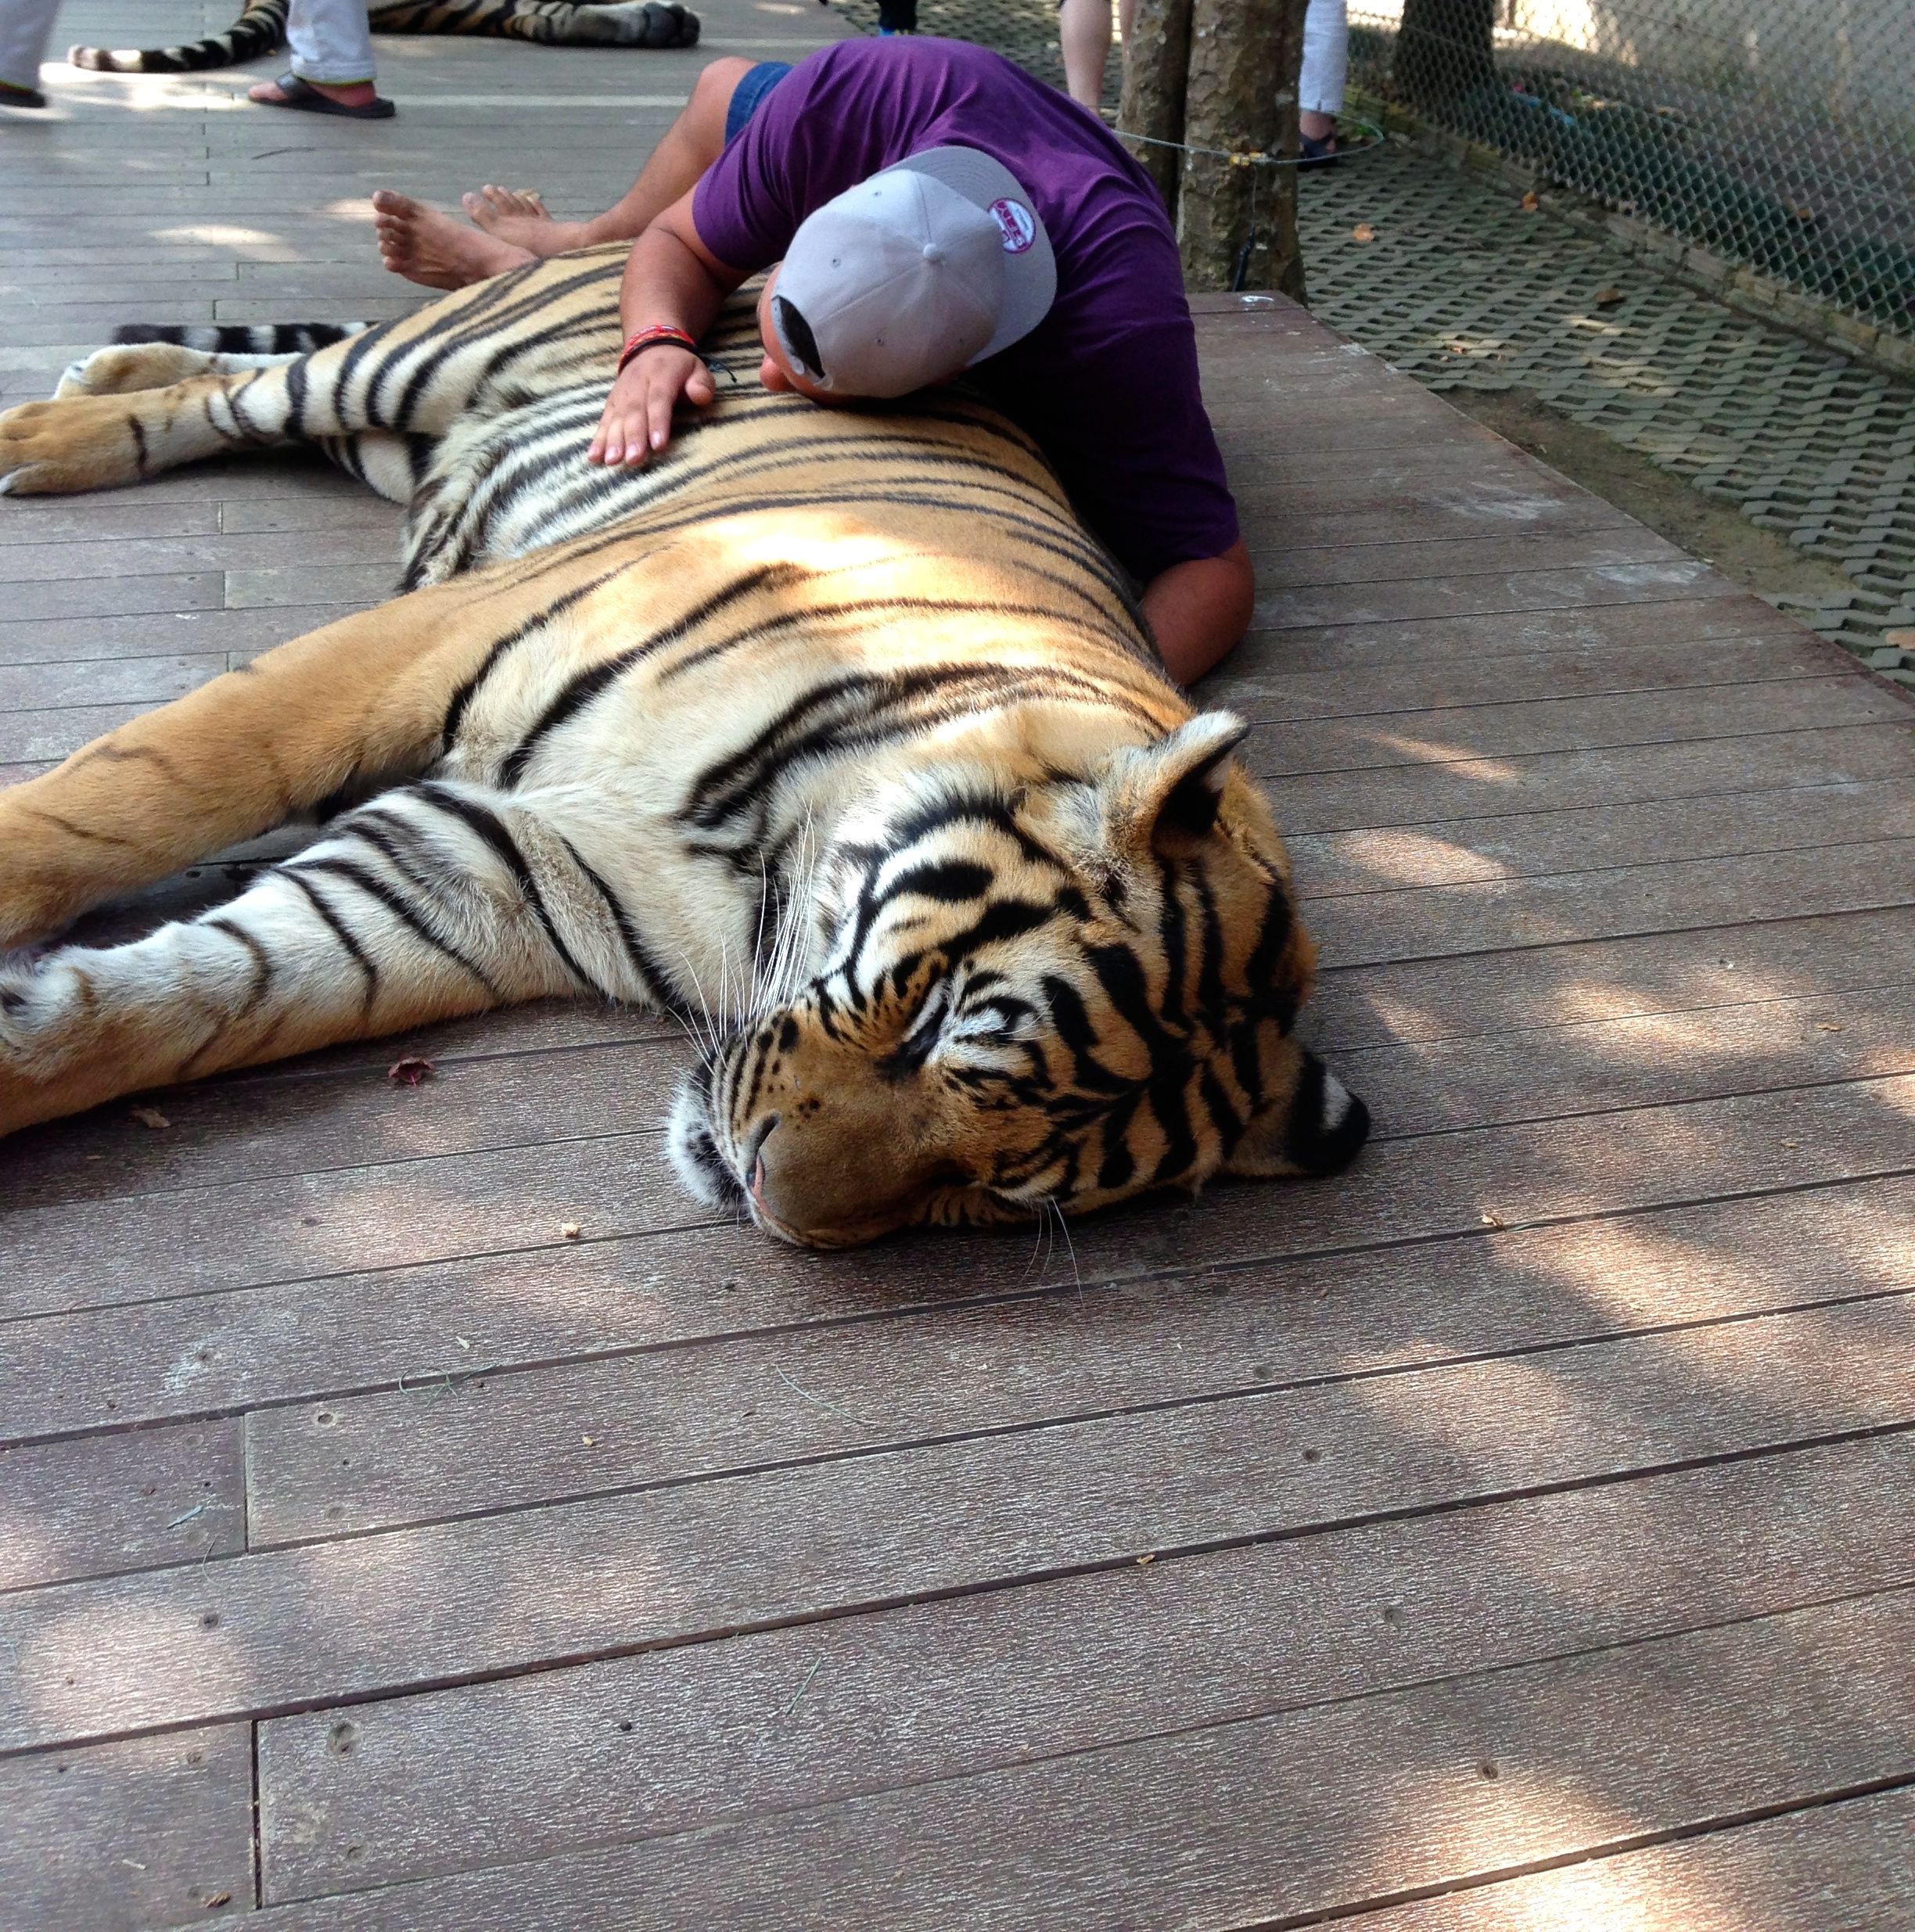 Tiger Kingdom Chiang Mai Thailand